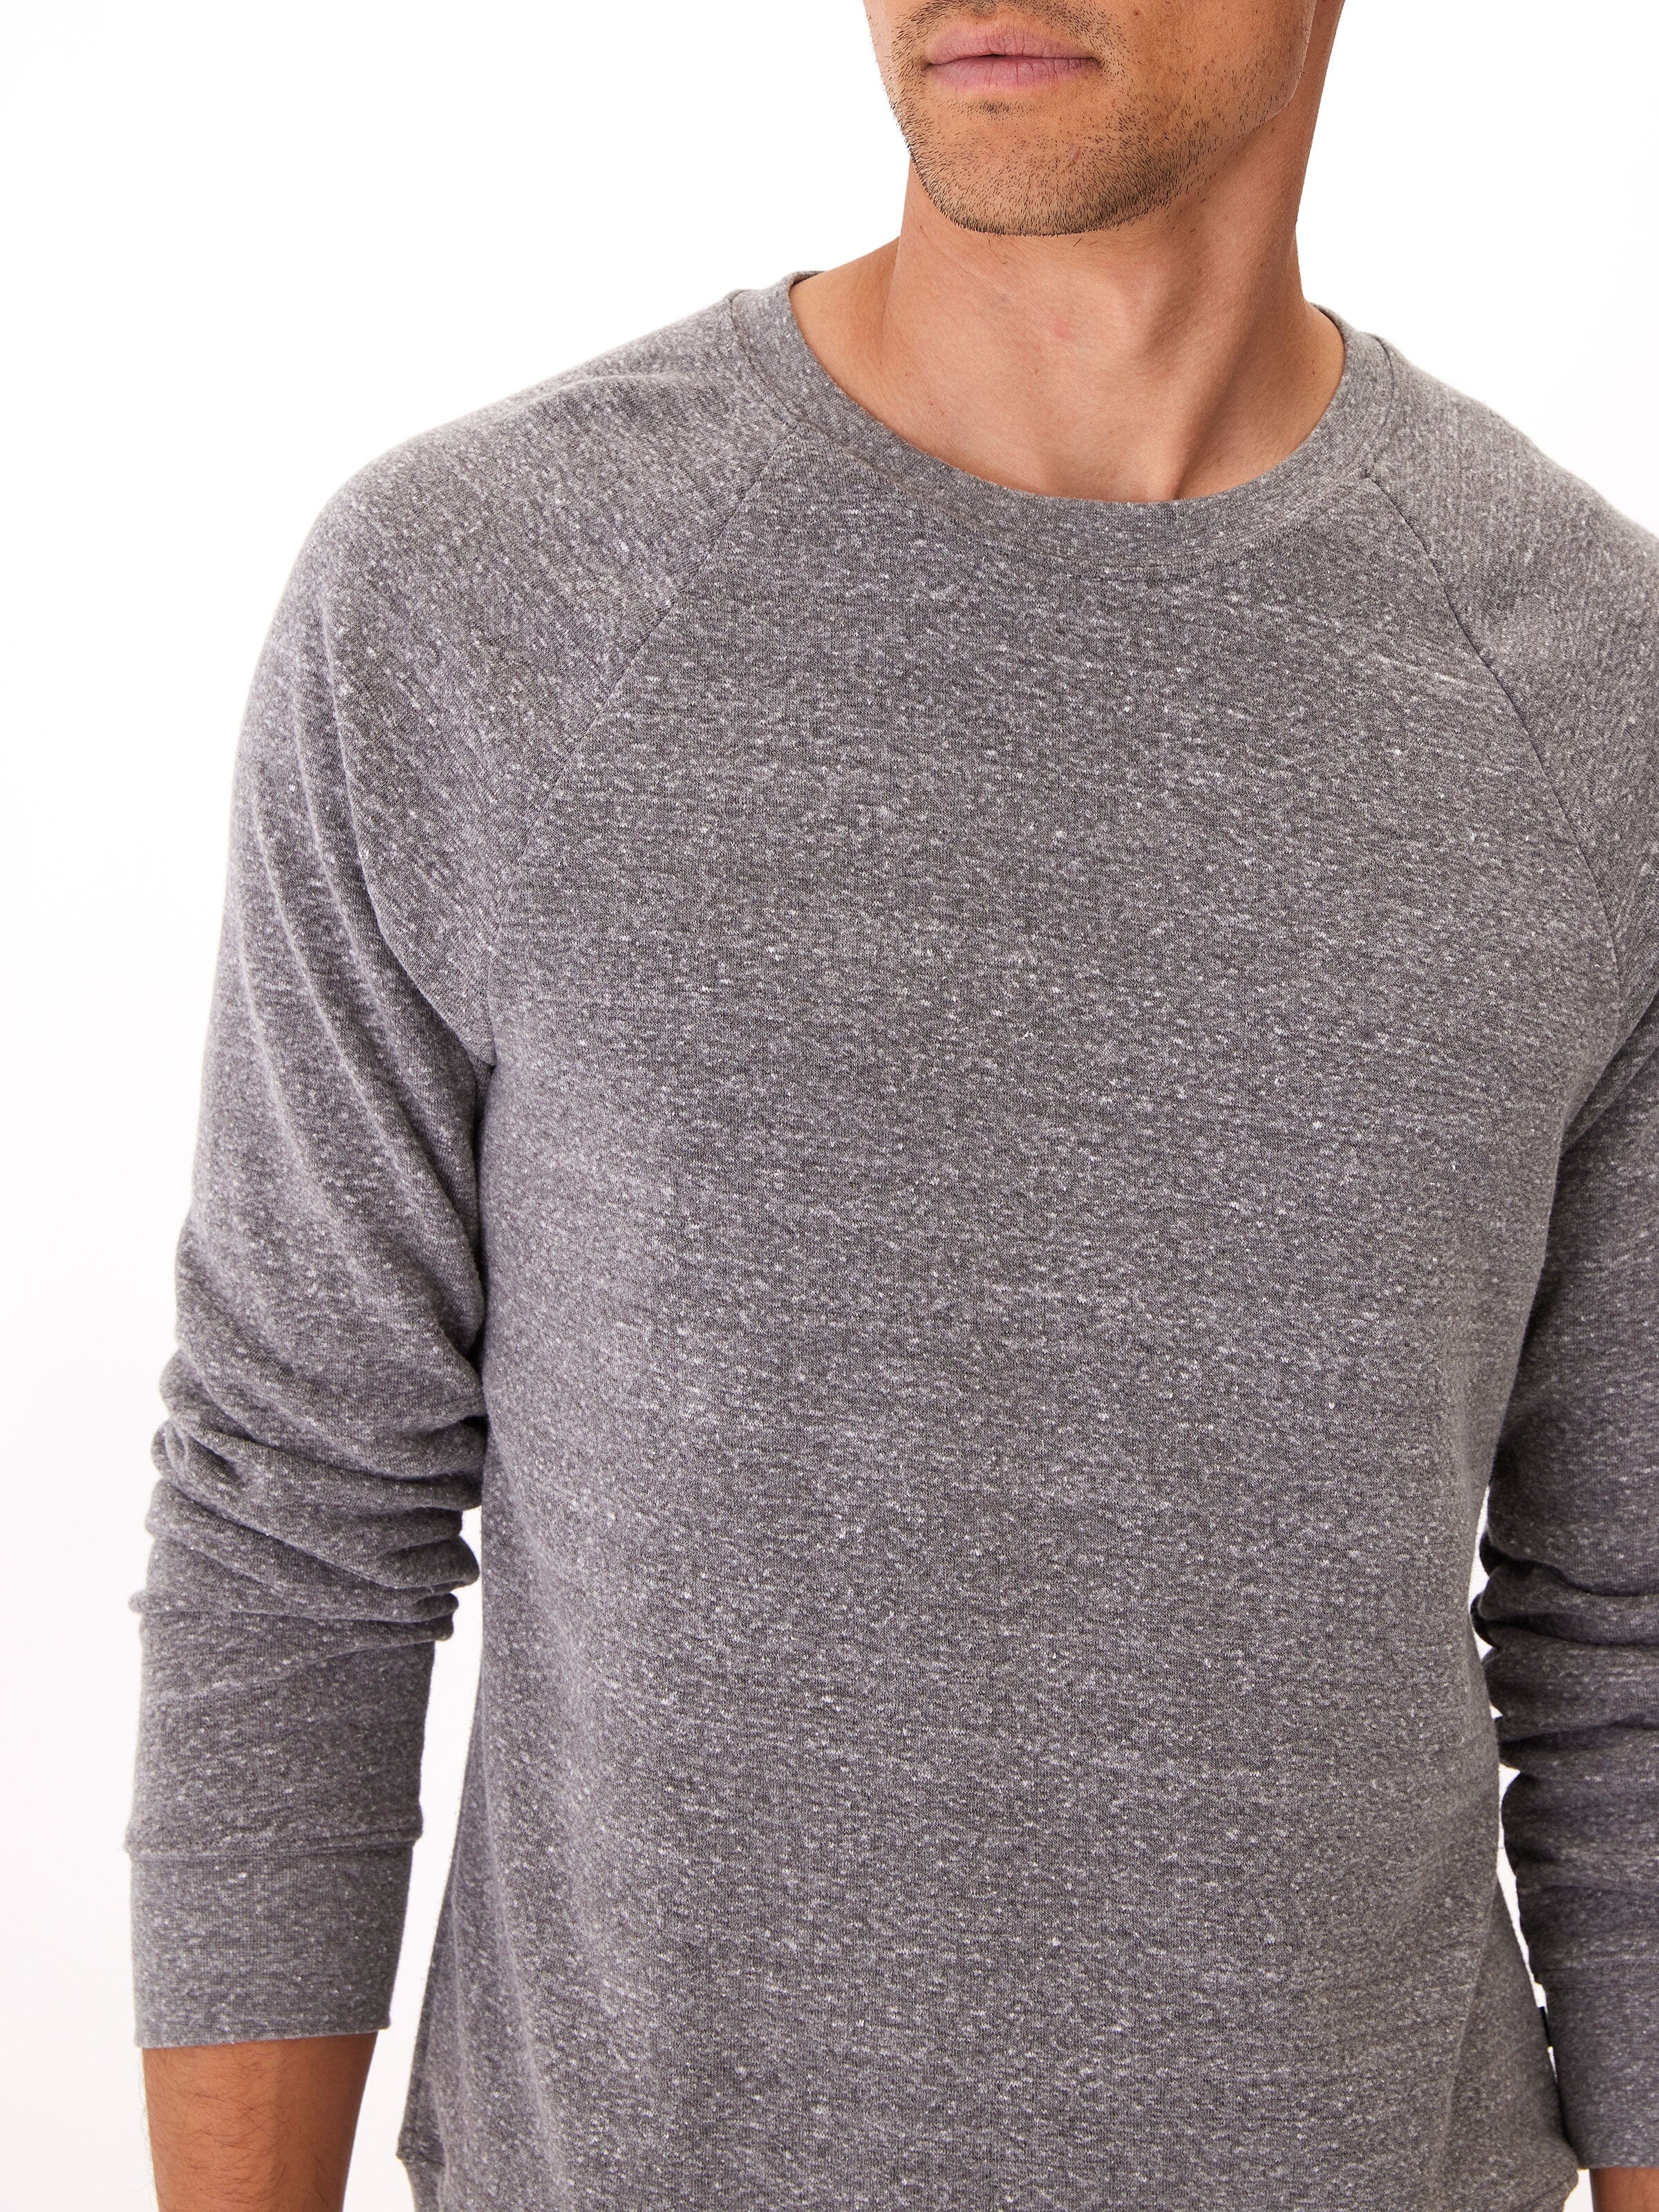 Triblend Ls Raglan Sweatshirt in Heather Grey – Threads 4 Thought | T-Shirts